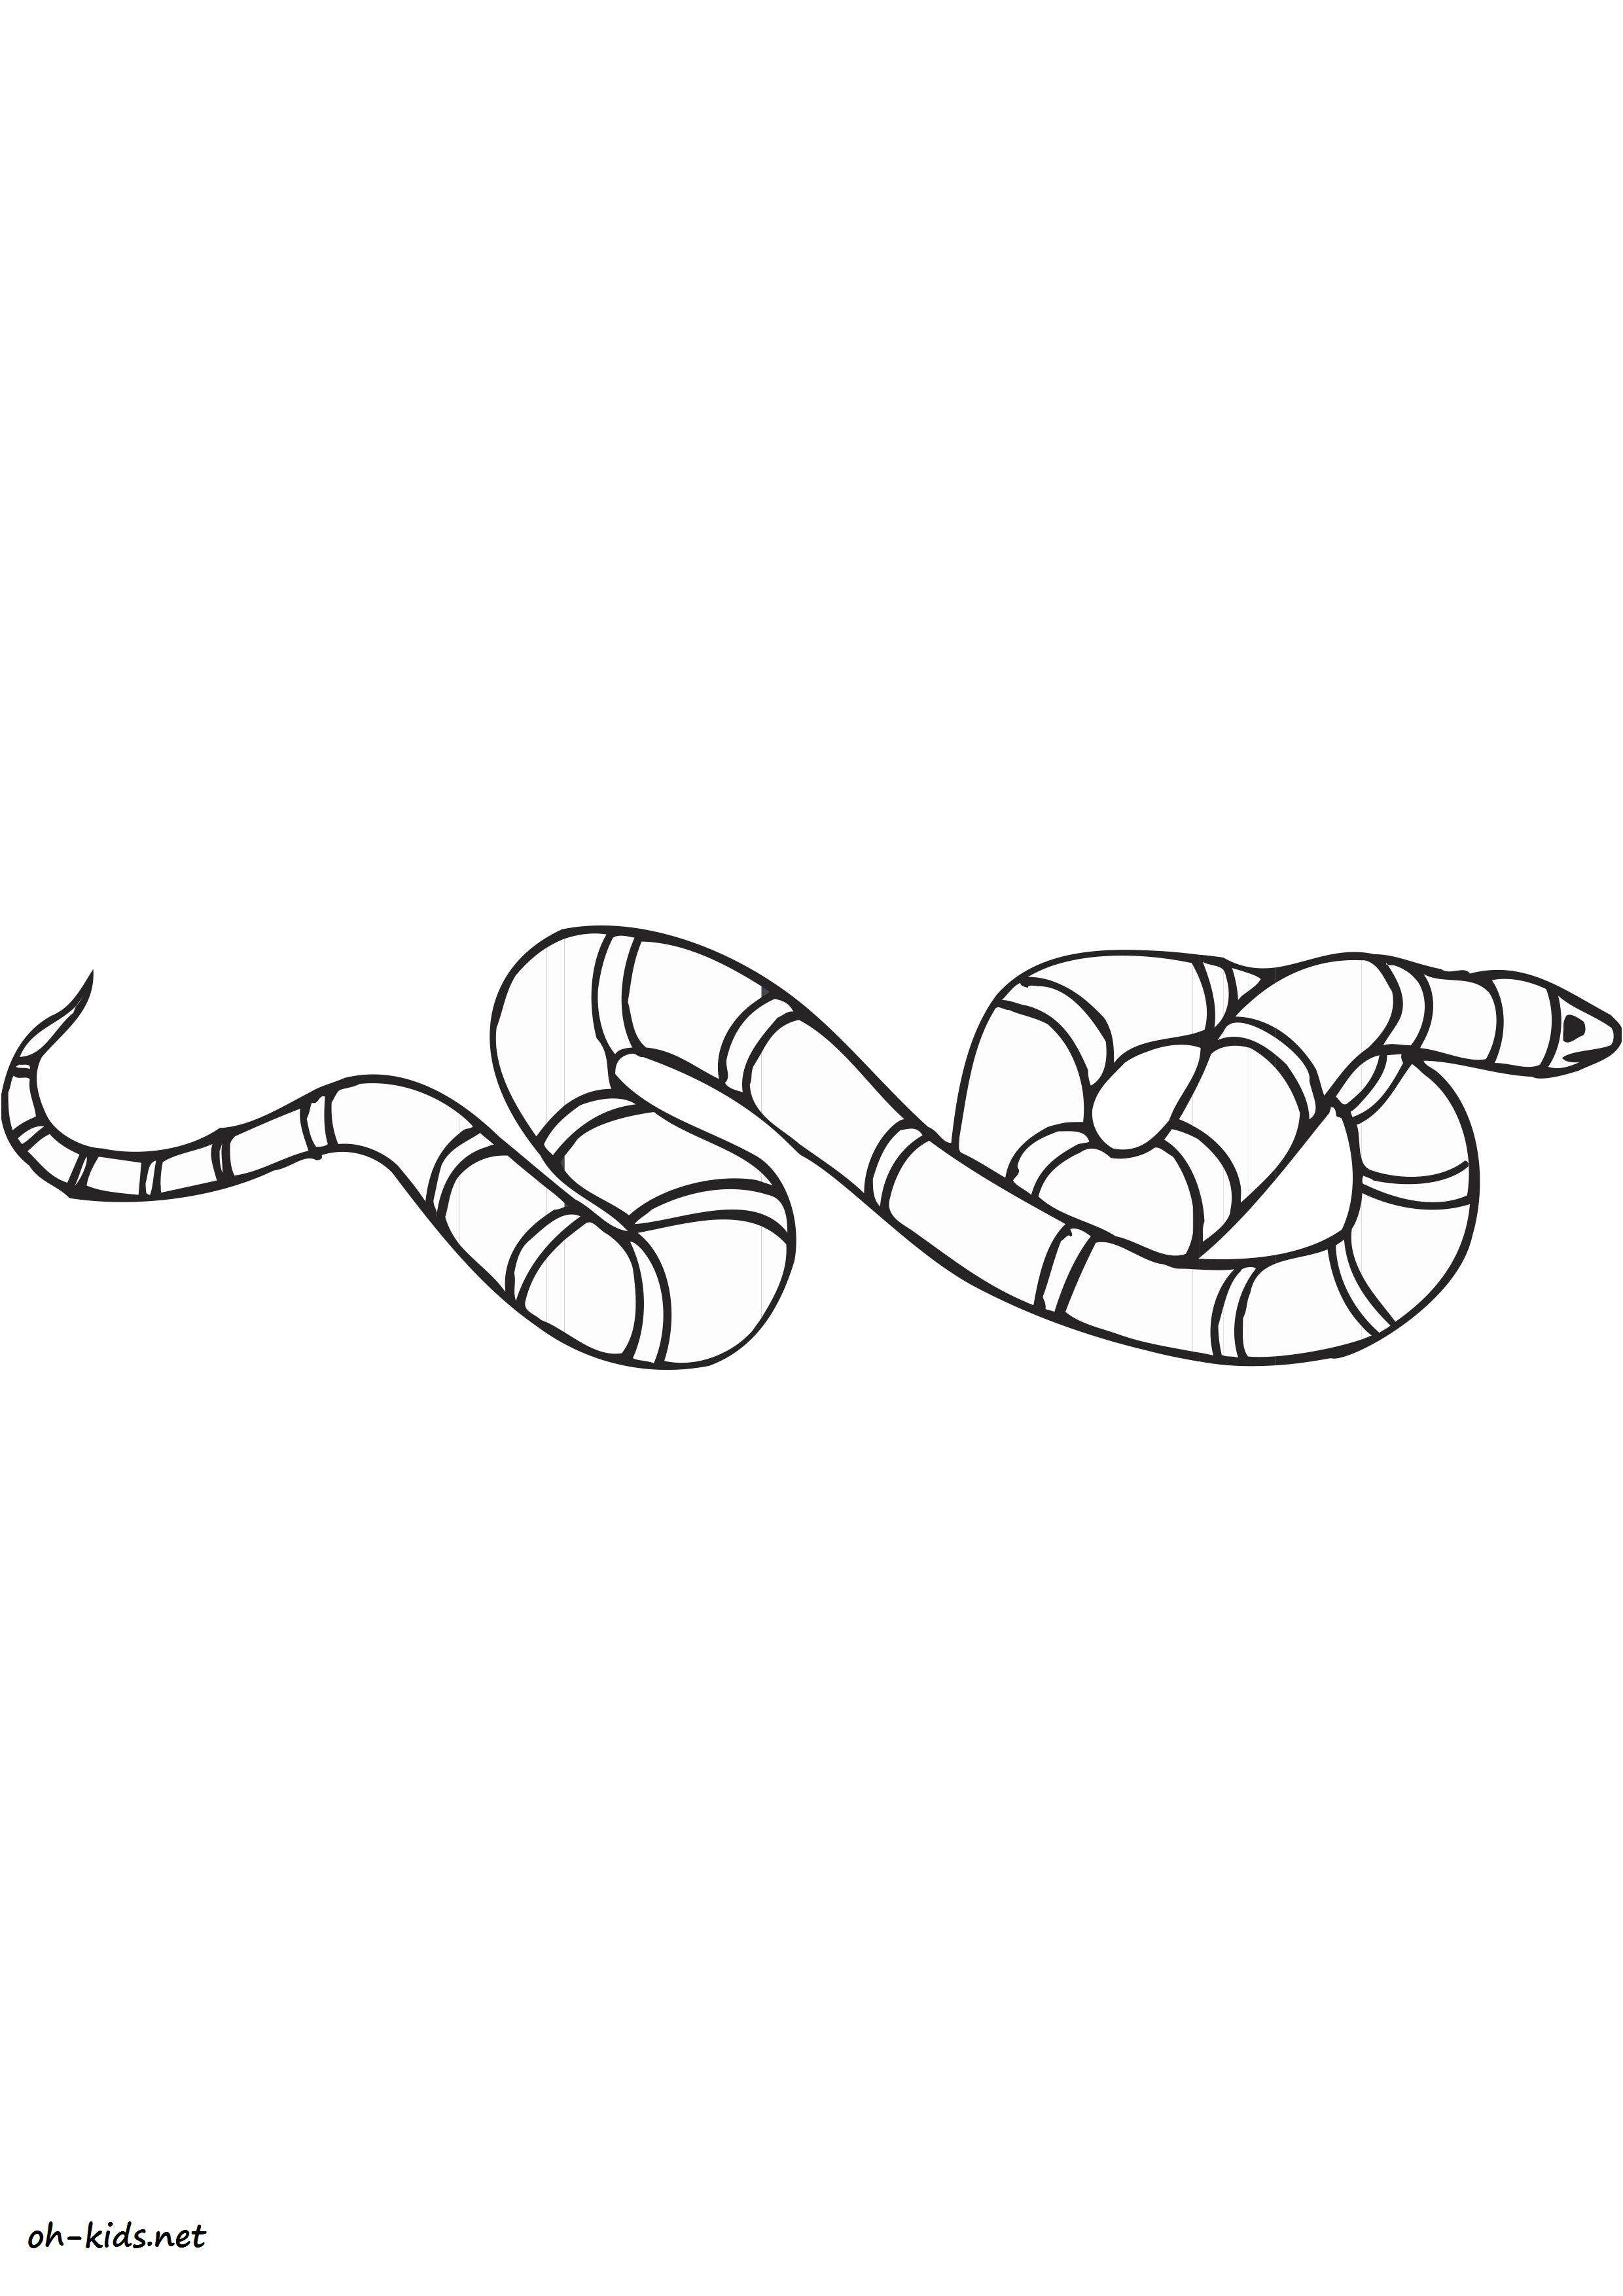 Serpent Coloriage Inspiration Dessin 1084 Coloriage Serpent Imprimer Oh Kids